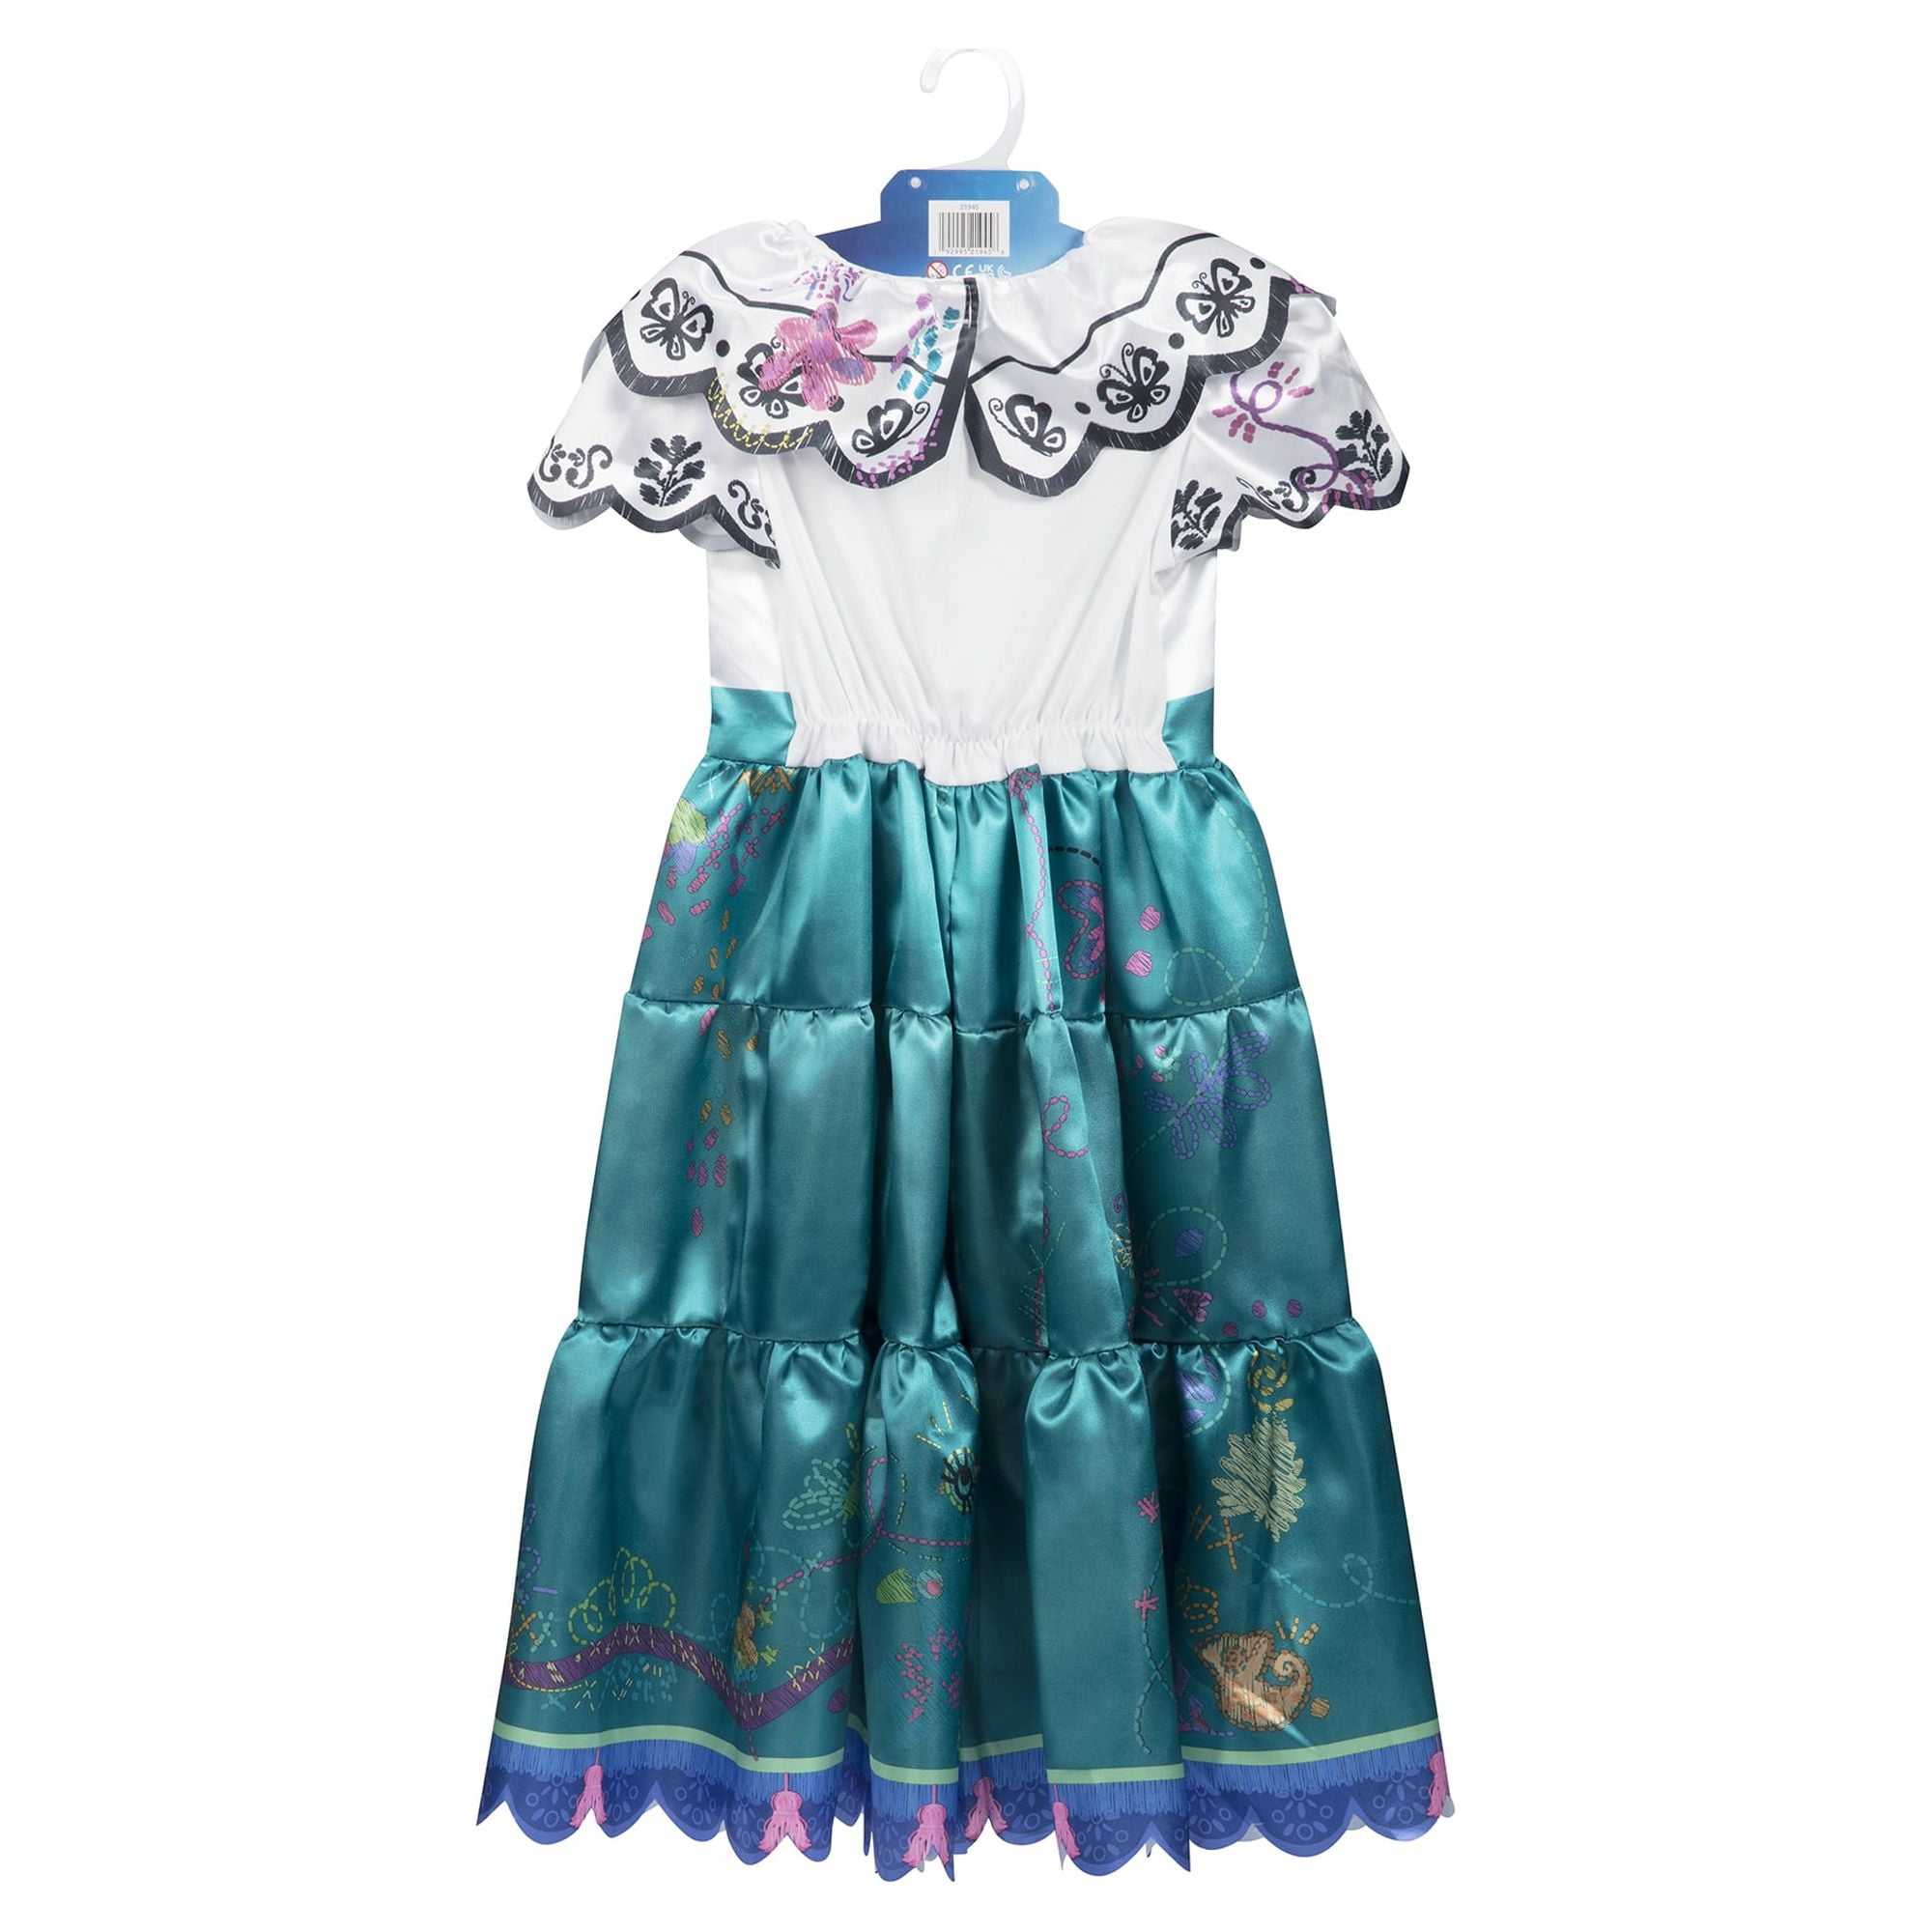 Encanto Mirabel robe fille - 98/104 (110) 3-4 ans - déguisement carnaval  dress up